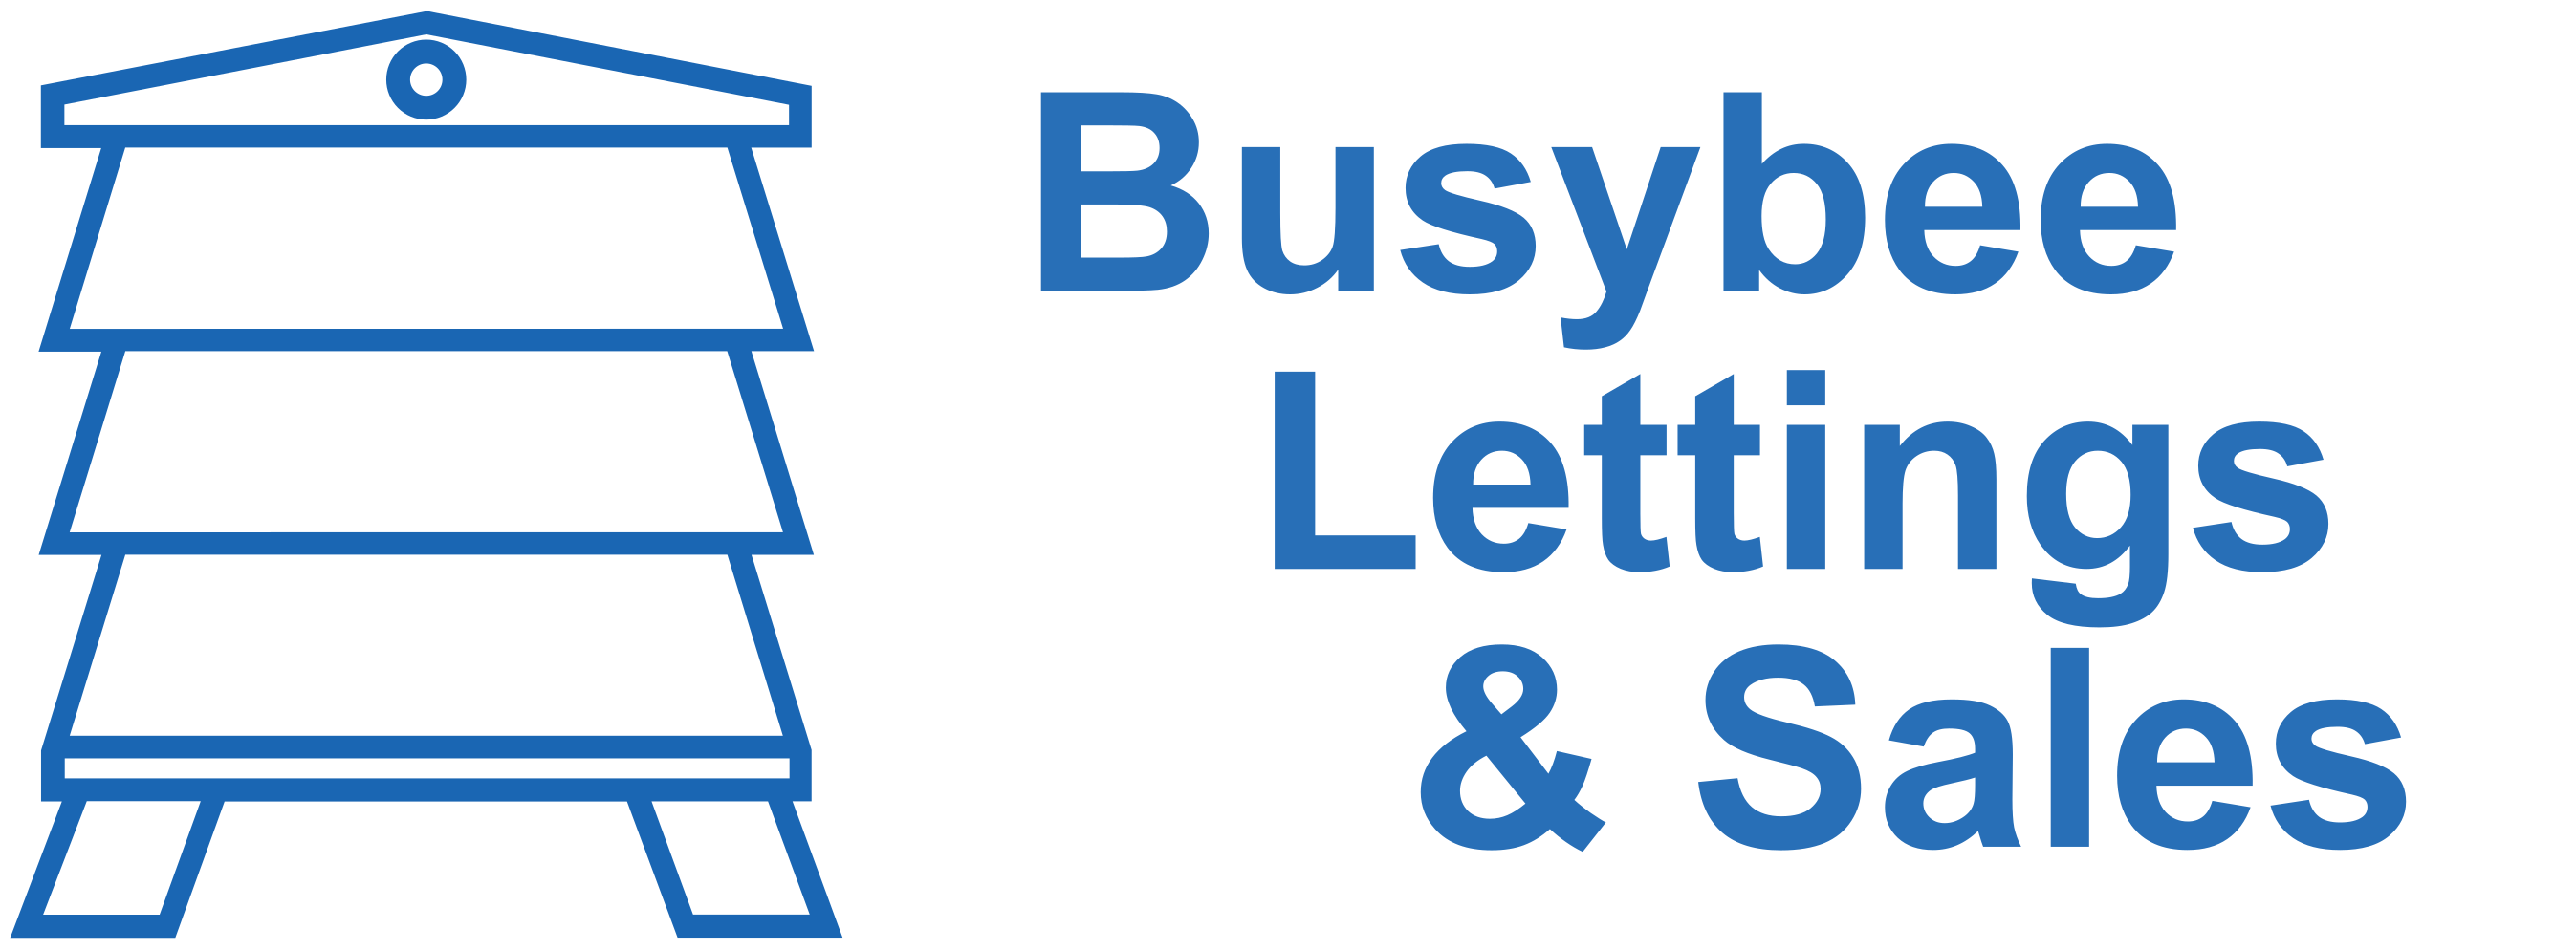 Busybee Lettings & Sales - Street